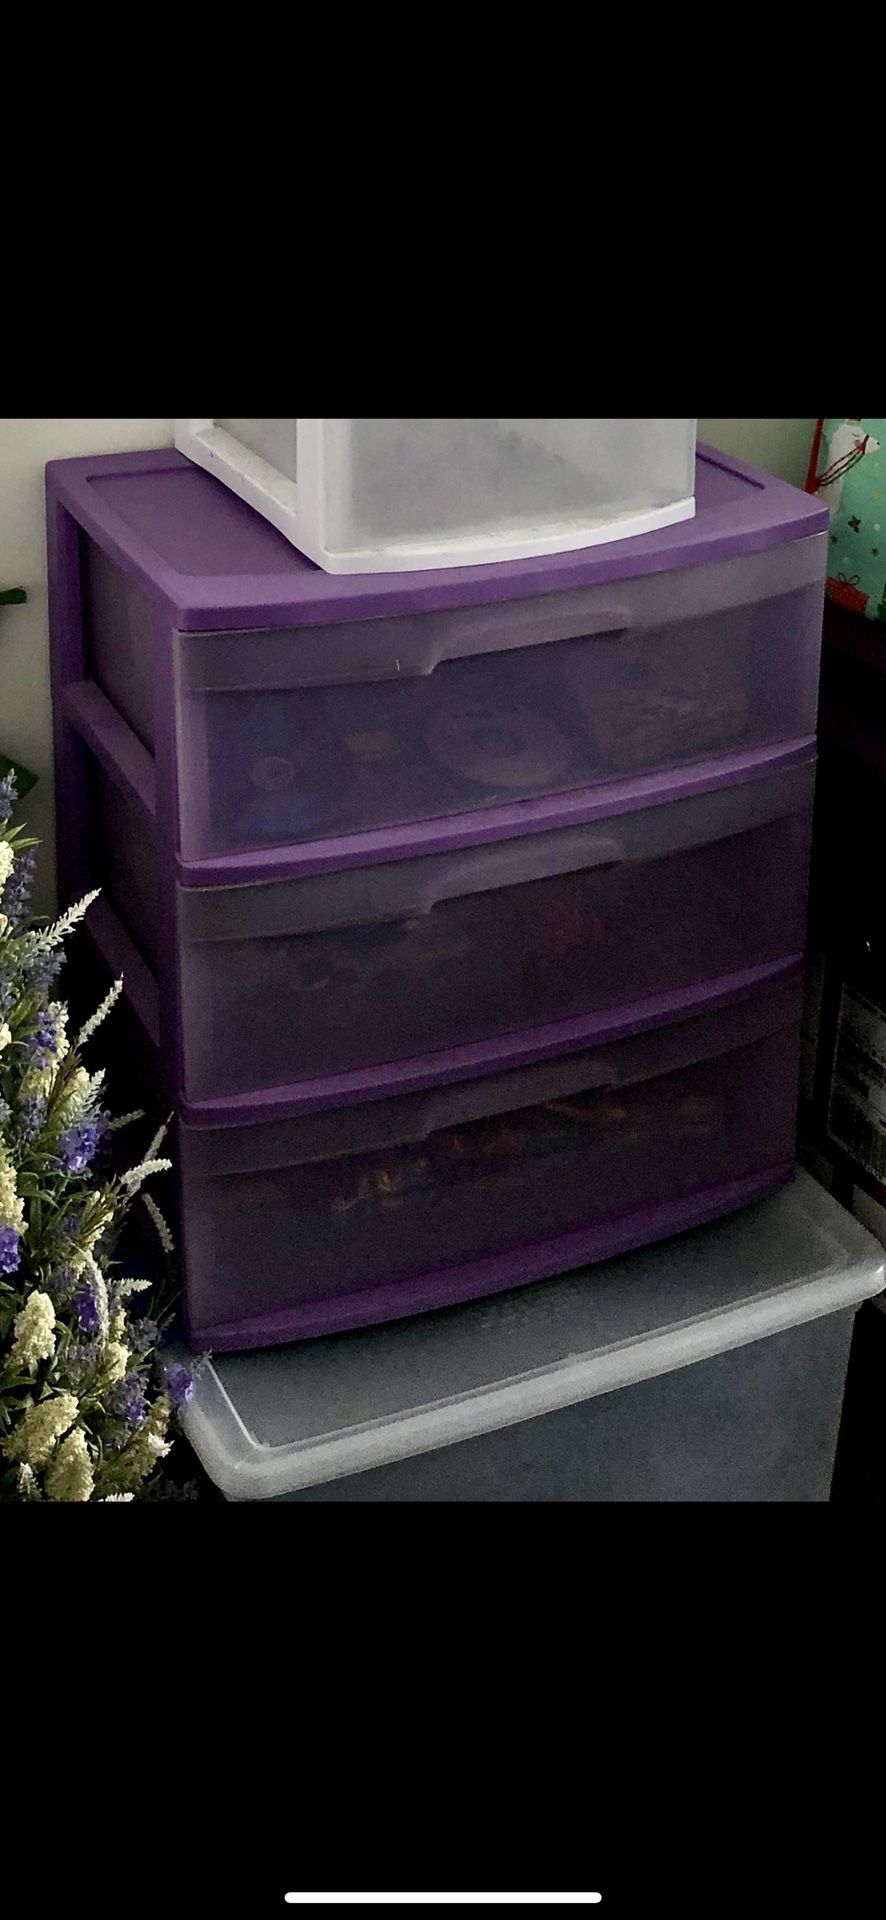 3 plastic drawer in purple